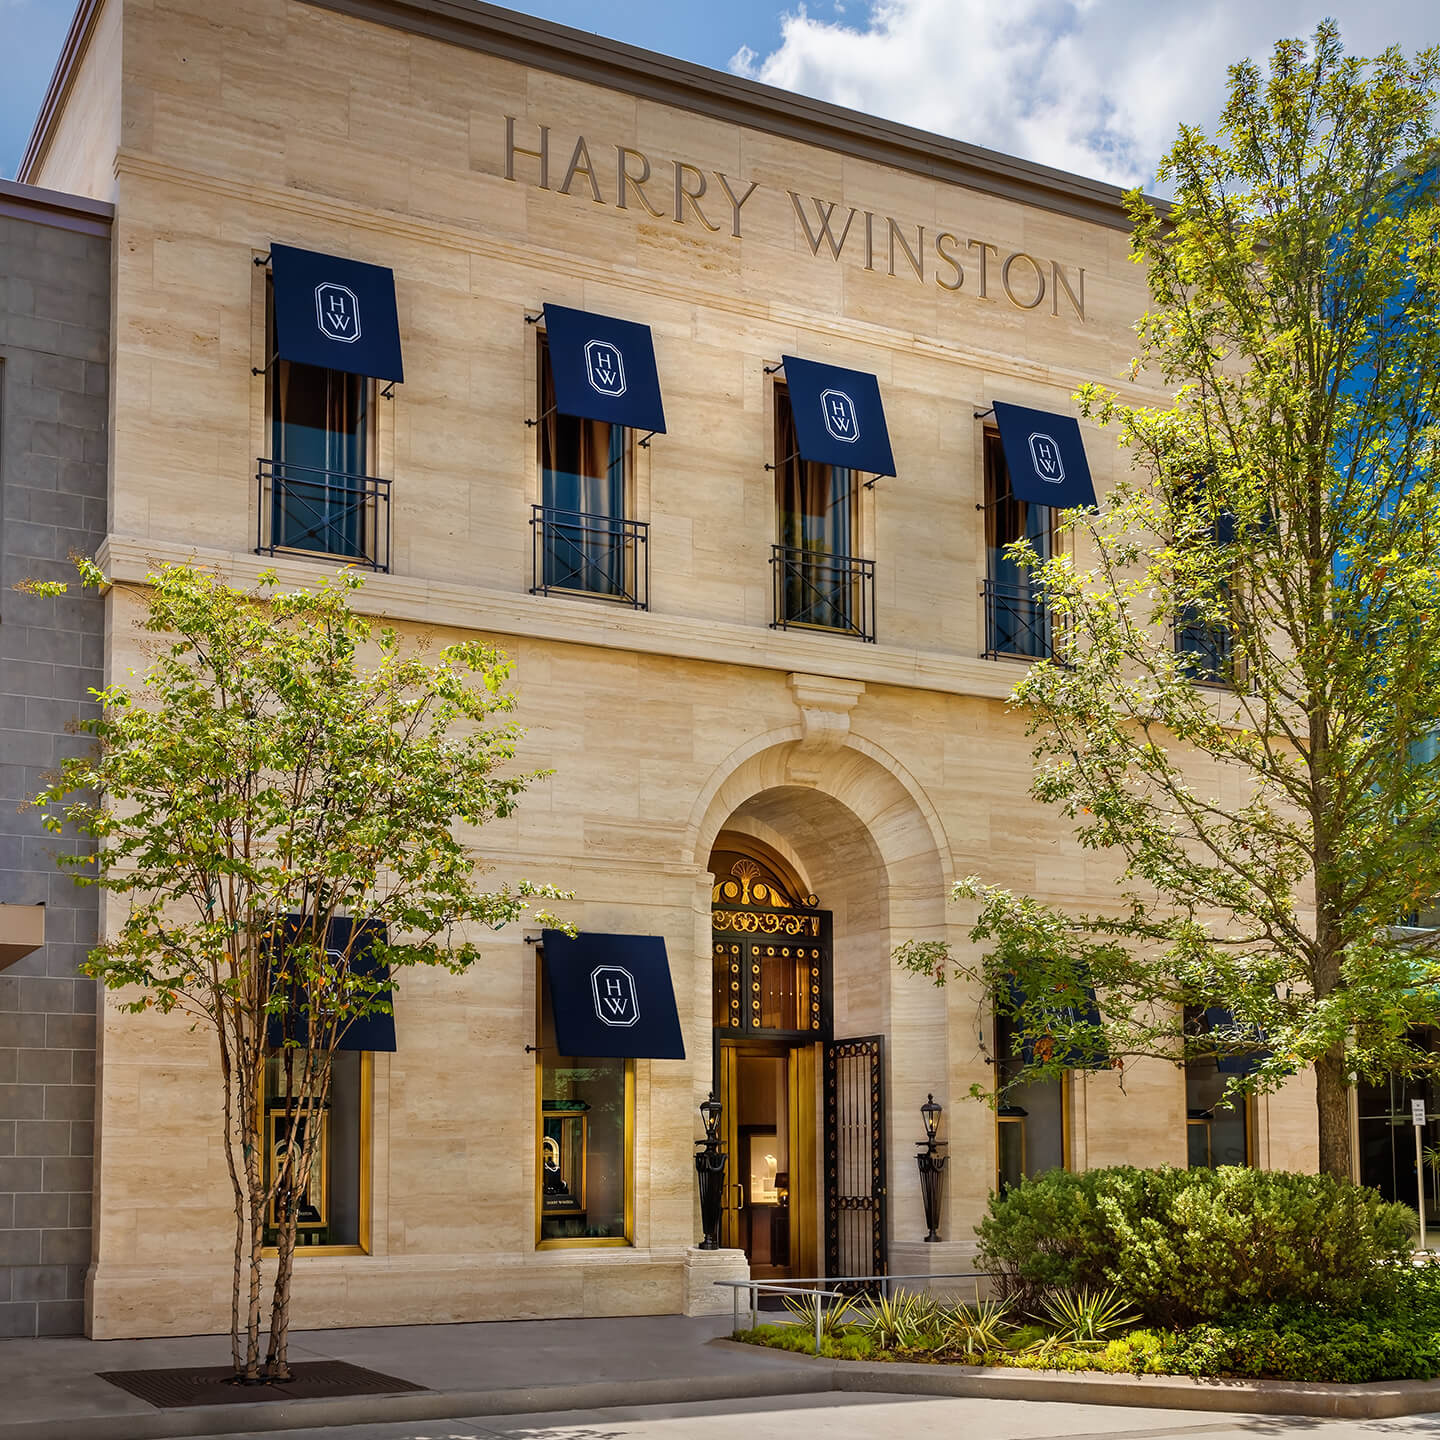 Façade of the Harry Winston Houston Salon